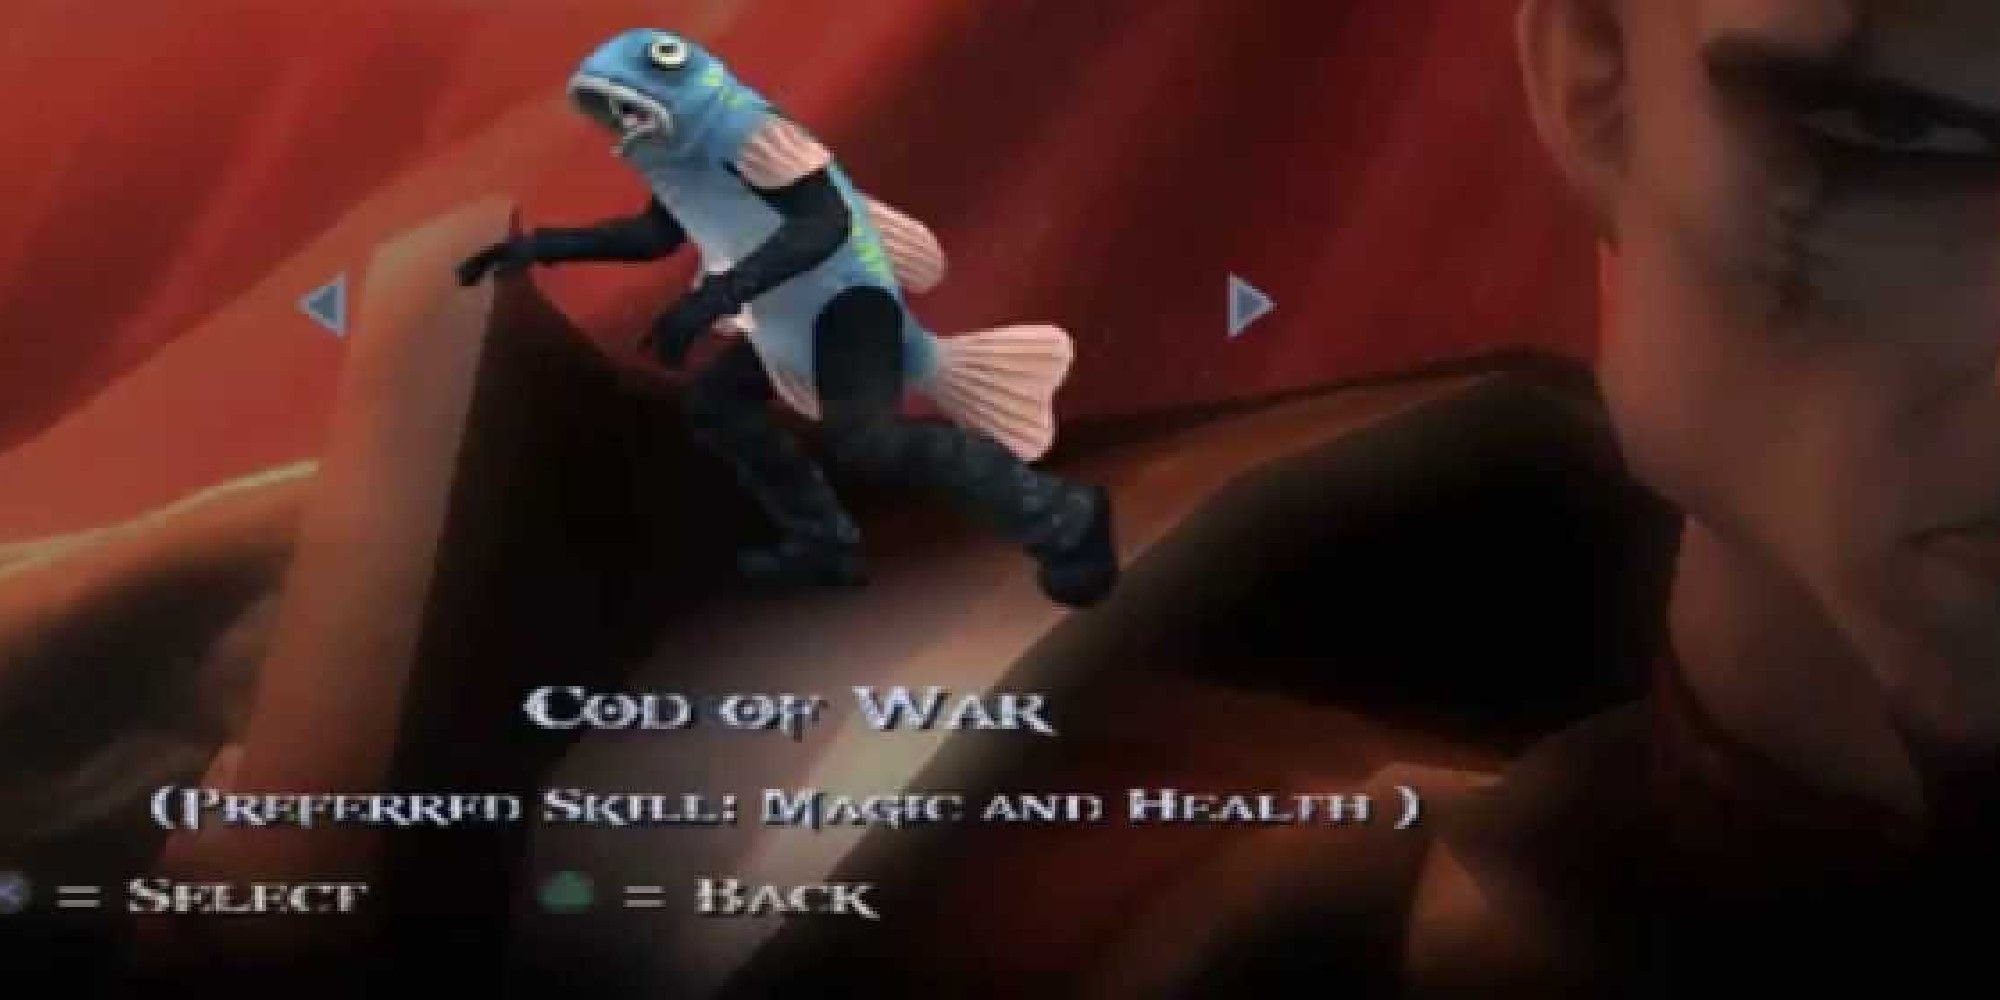 God-of-war-cod-of-war-costume